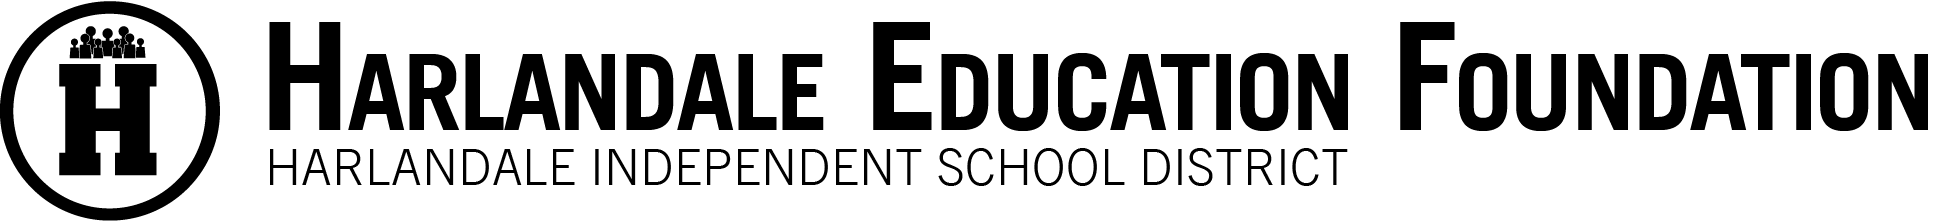 hef logo